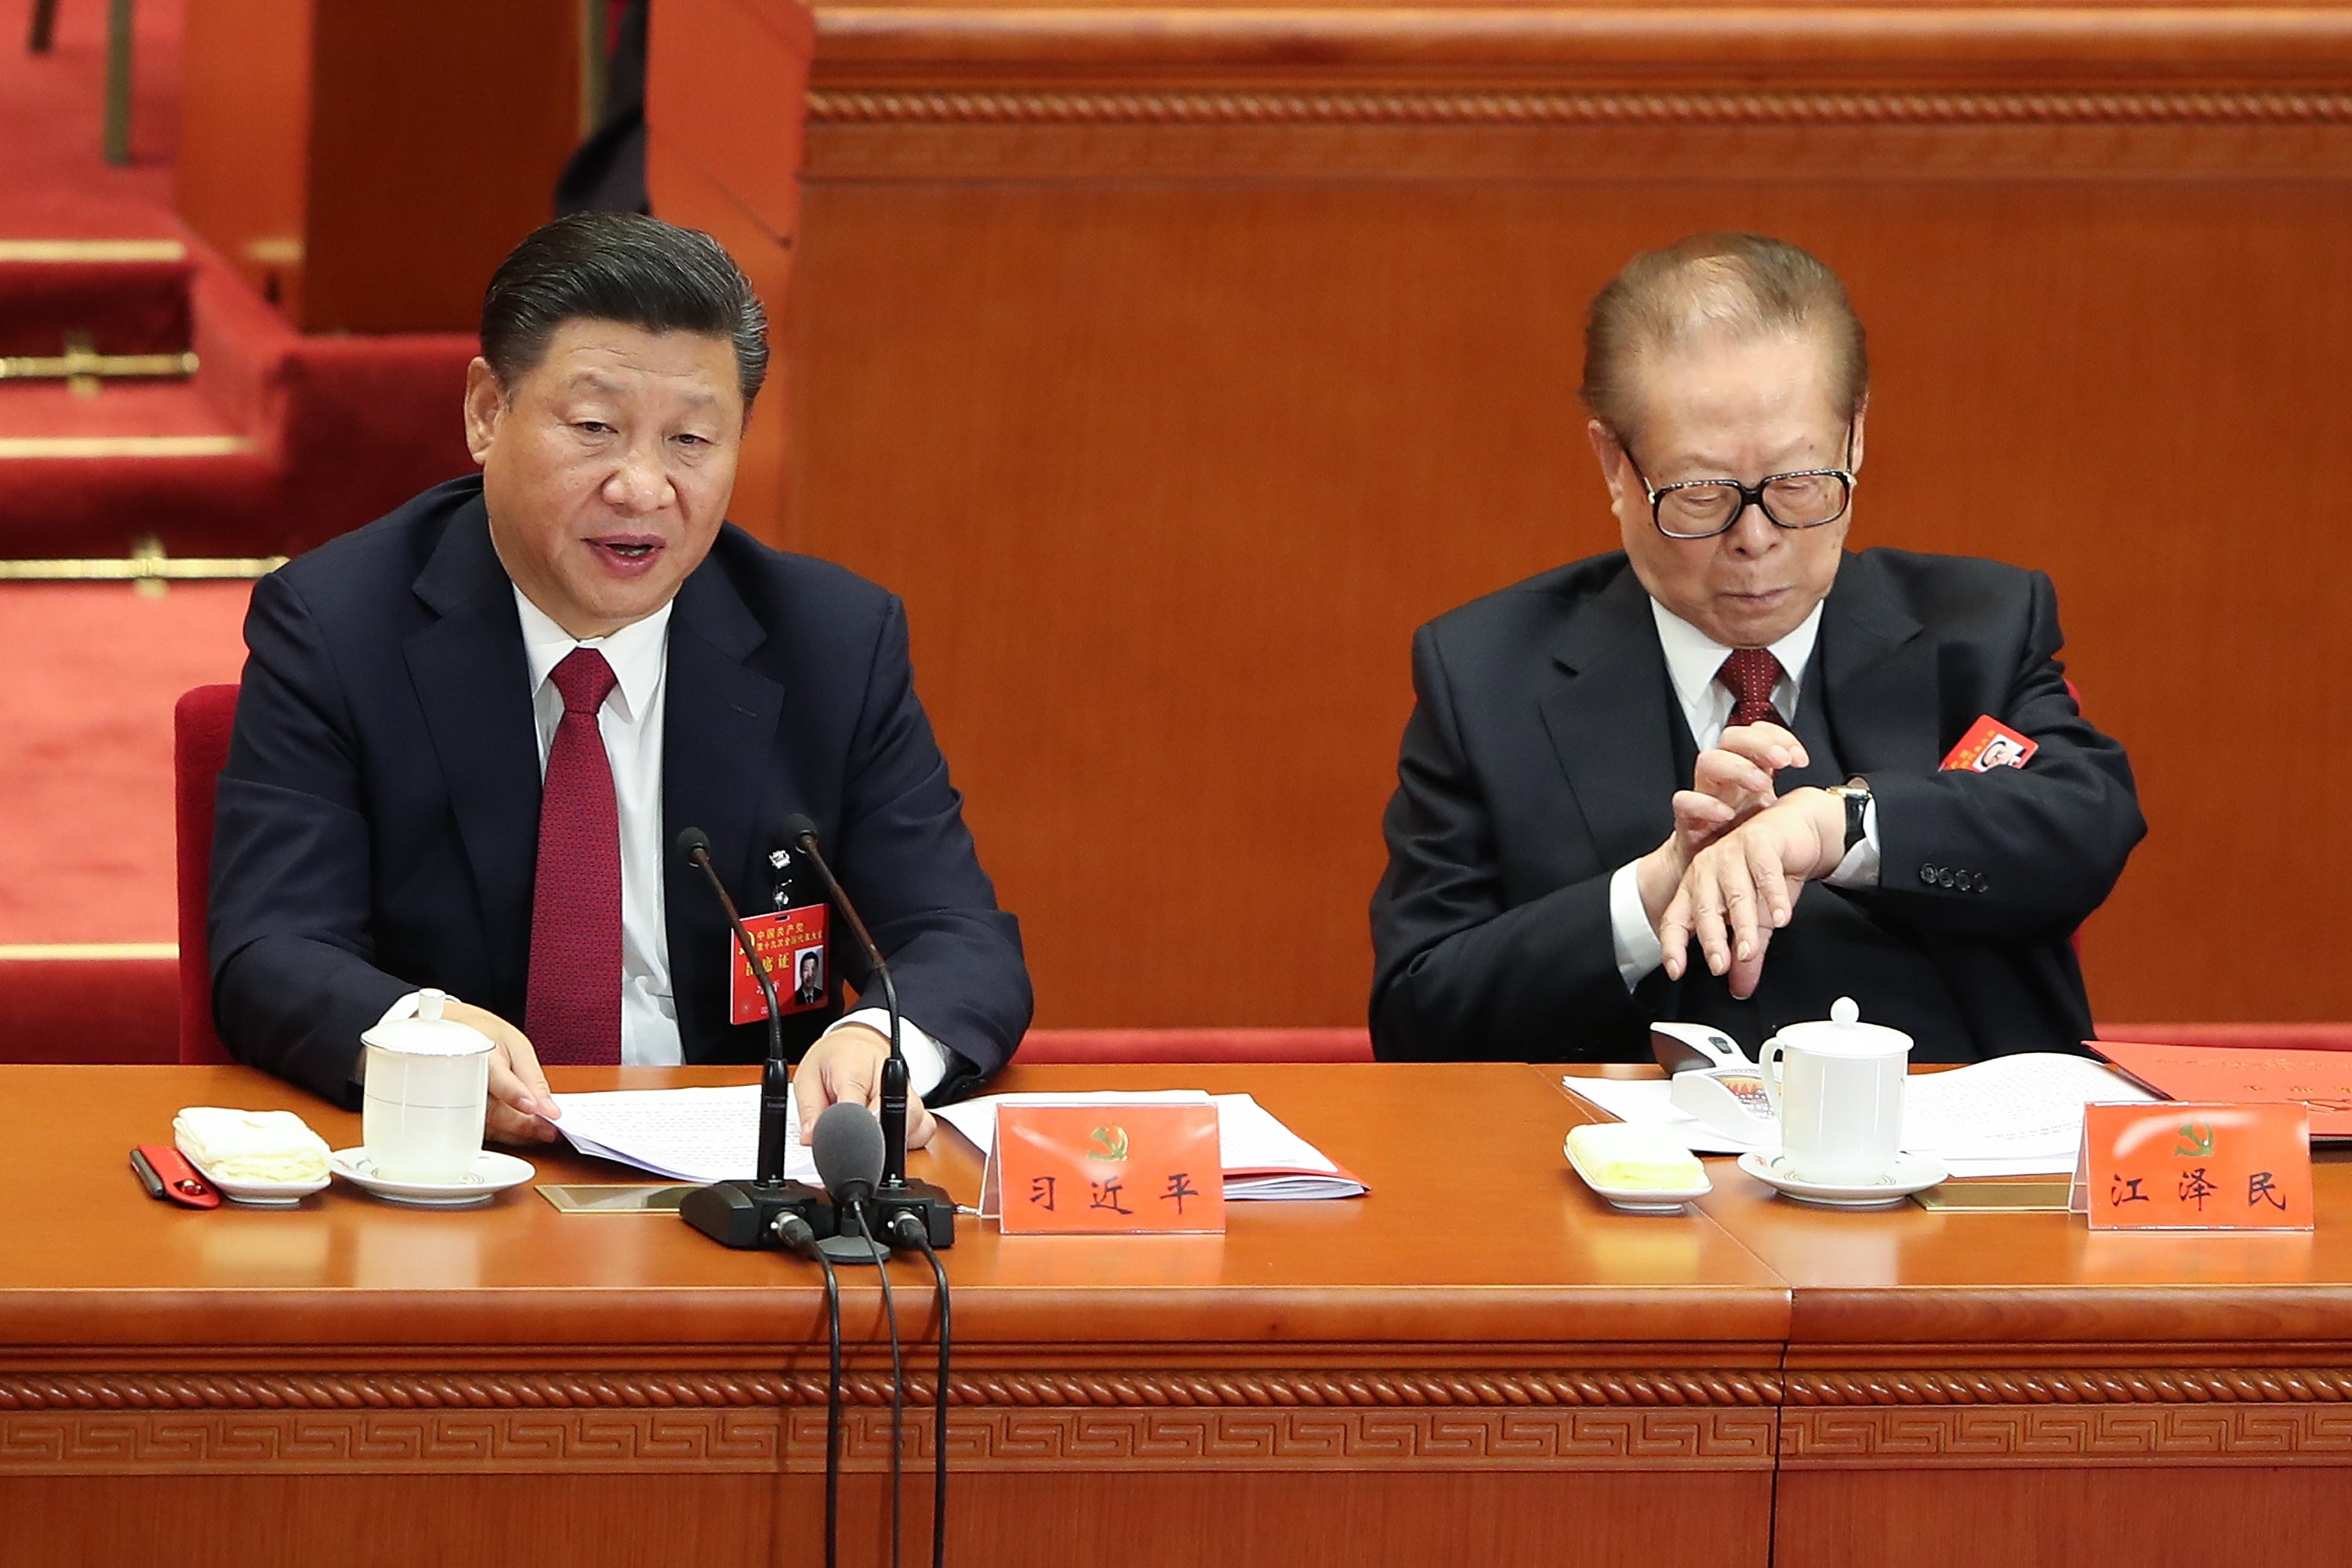 Xi Jinping, left, with predecessor Jiang Zemin in 2017